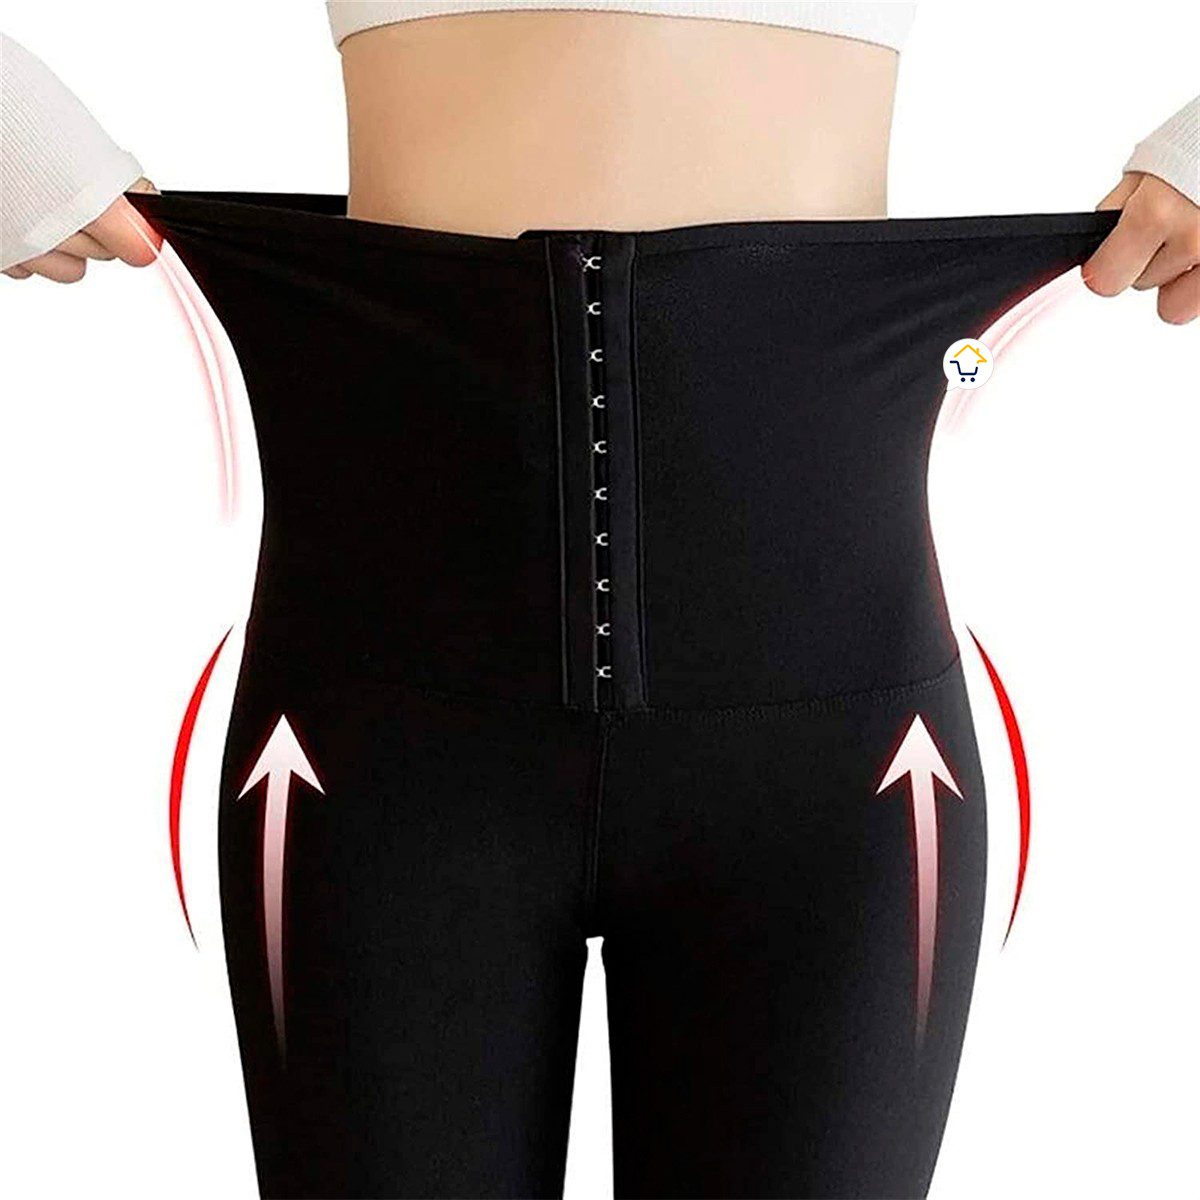 Pantalón Cinturilla Mujer Faja Broches Sauna Reductora Neopreno 22010